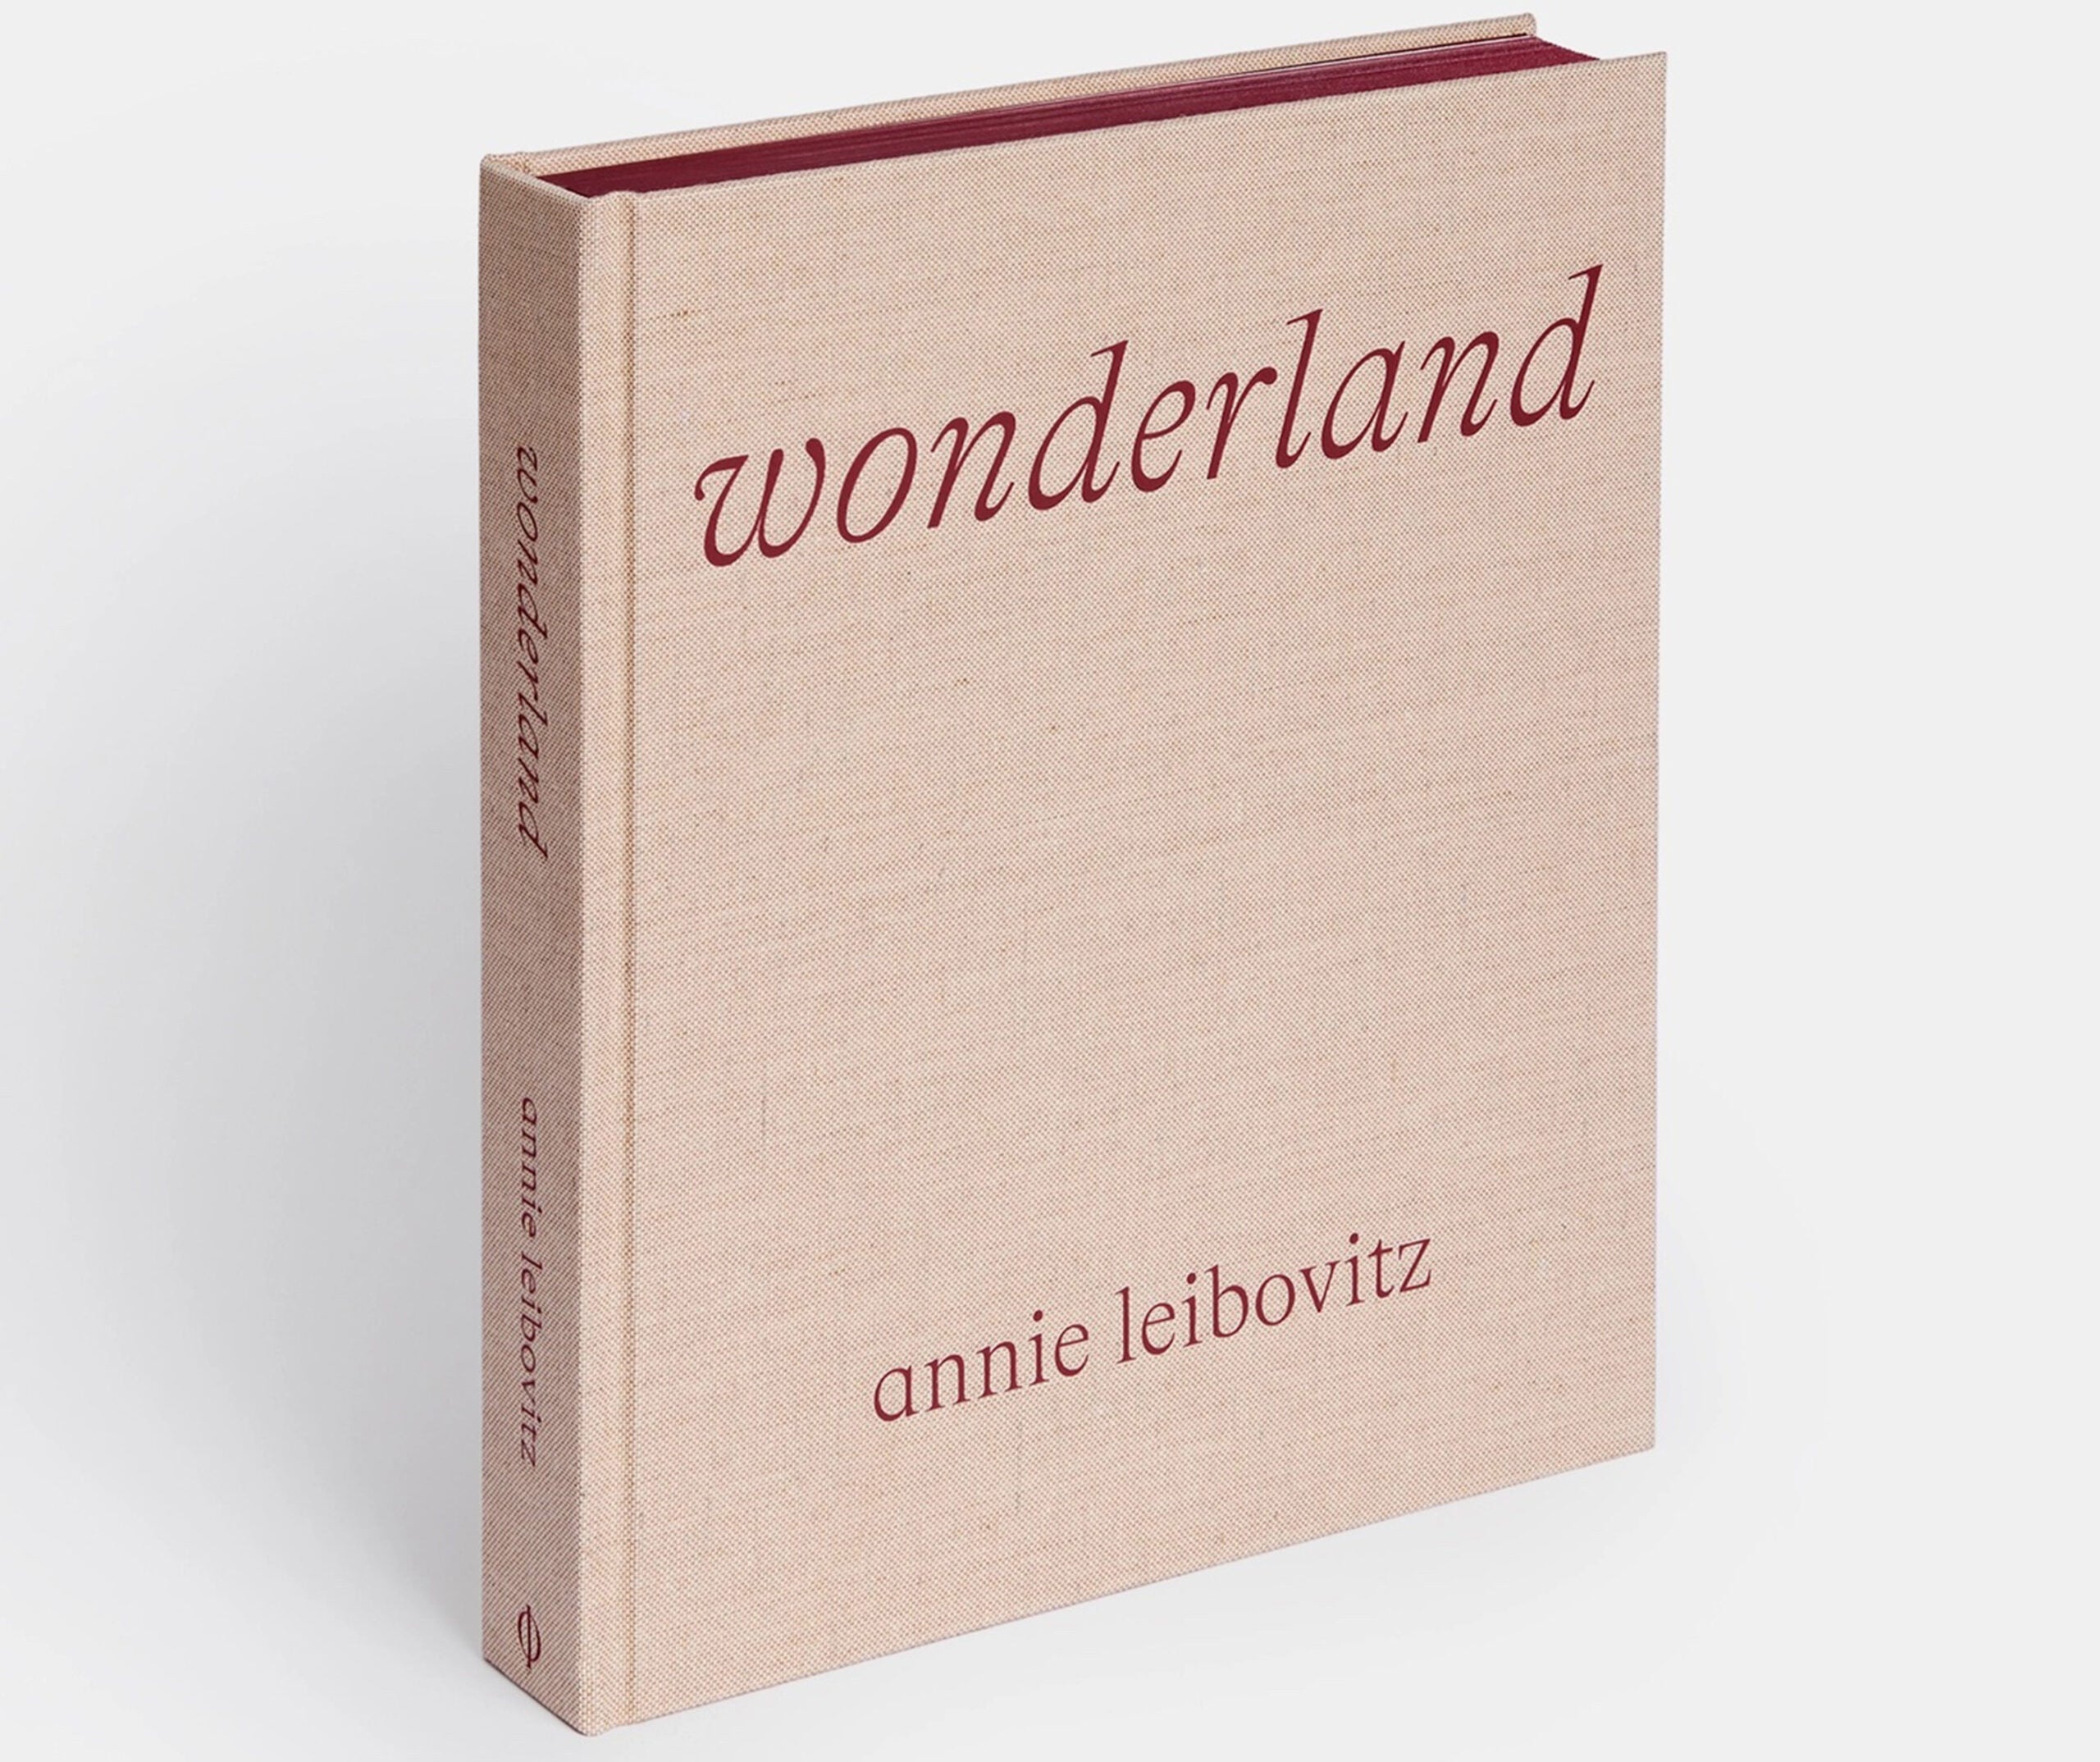 The cover of Annie Leibovitz's "Wonderland."